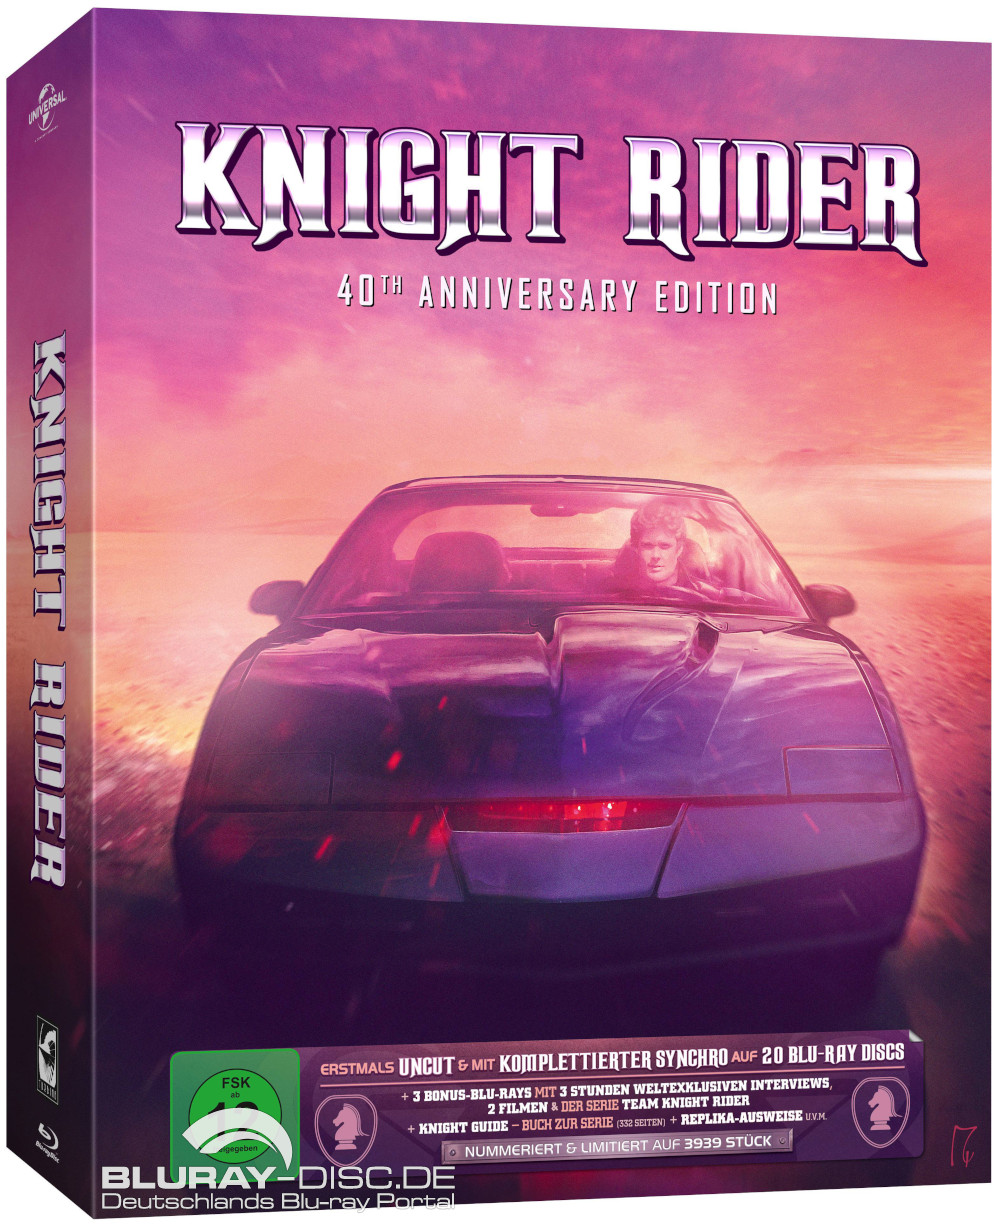 Knight-Rider-40th-Anniversary-Edition-Galerie-01.jpg